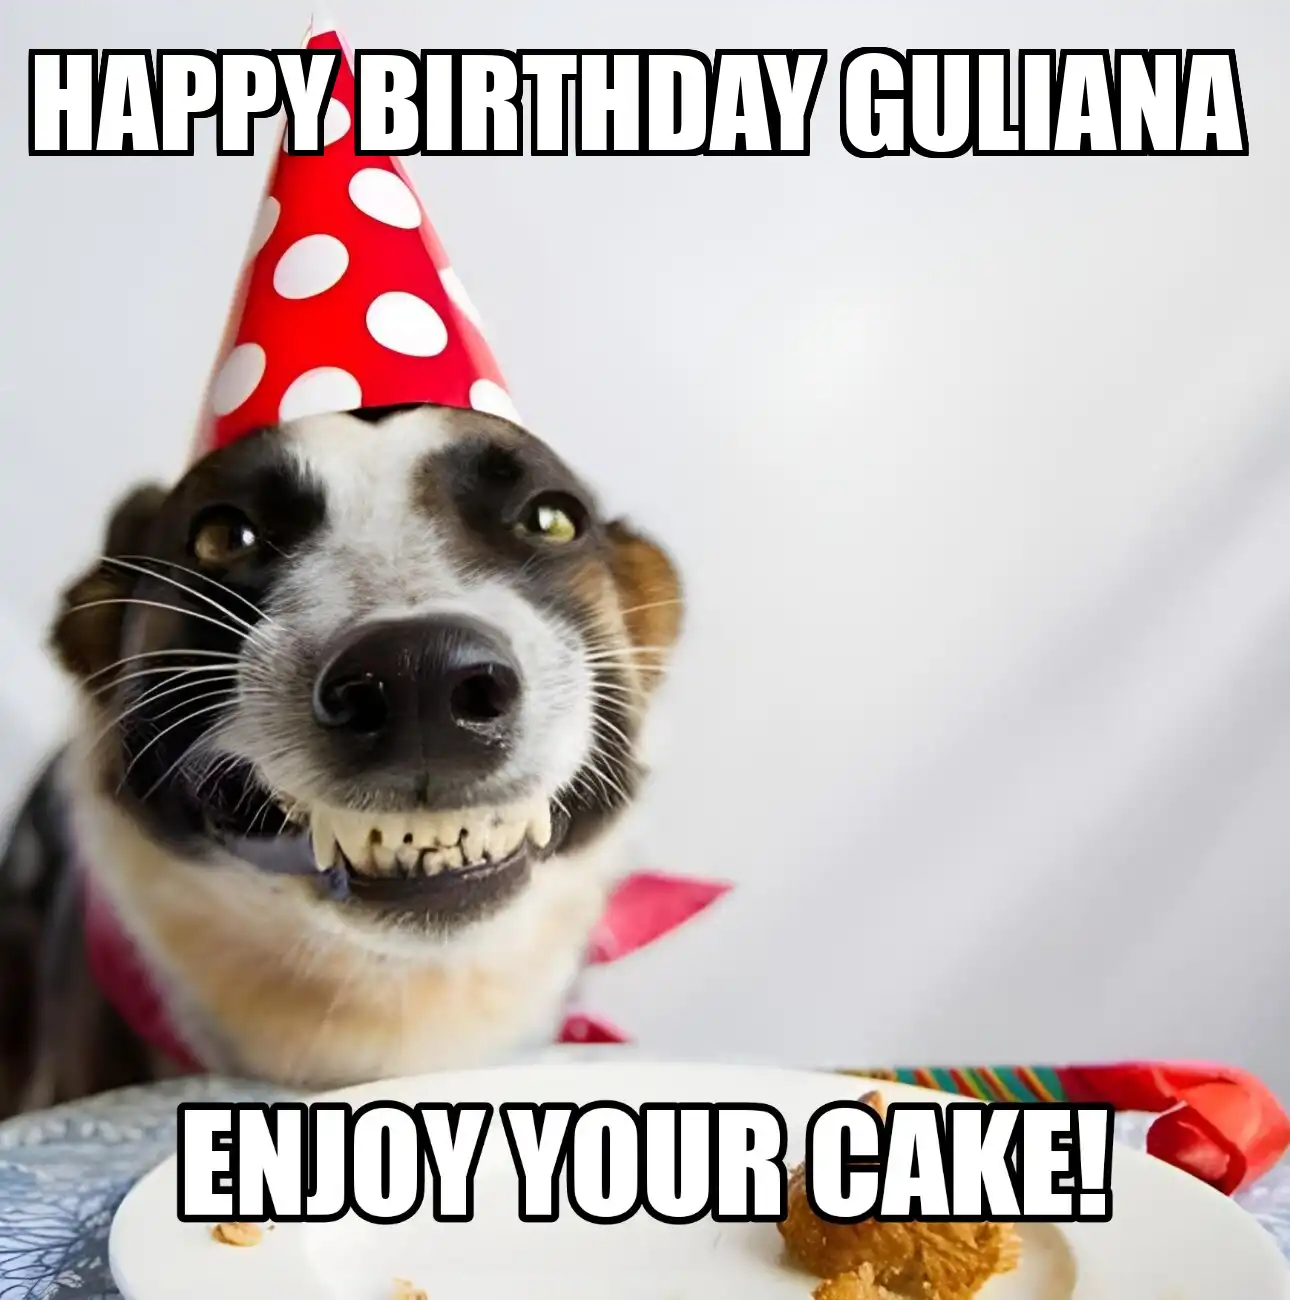 Happy Birthday Guliana Enjoy Your Cake Dog Meme